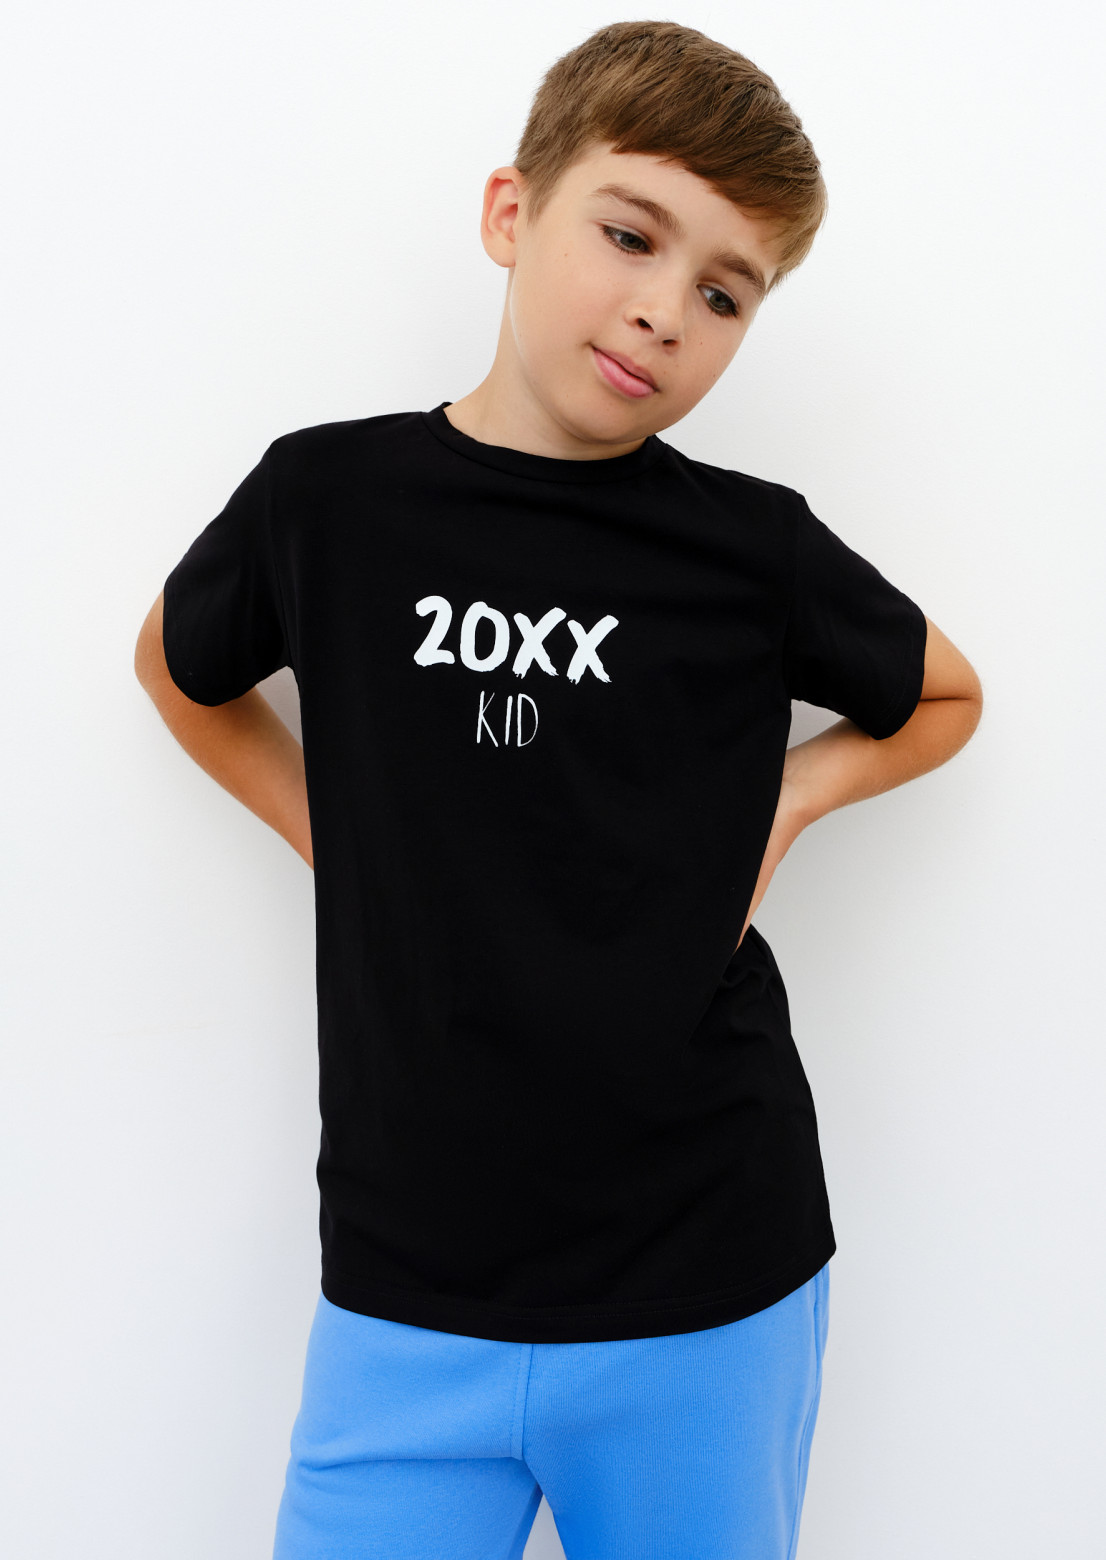 Children's black T-shirt with print "20XX KID"